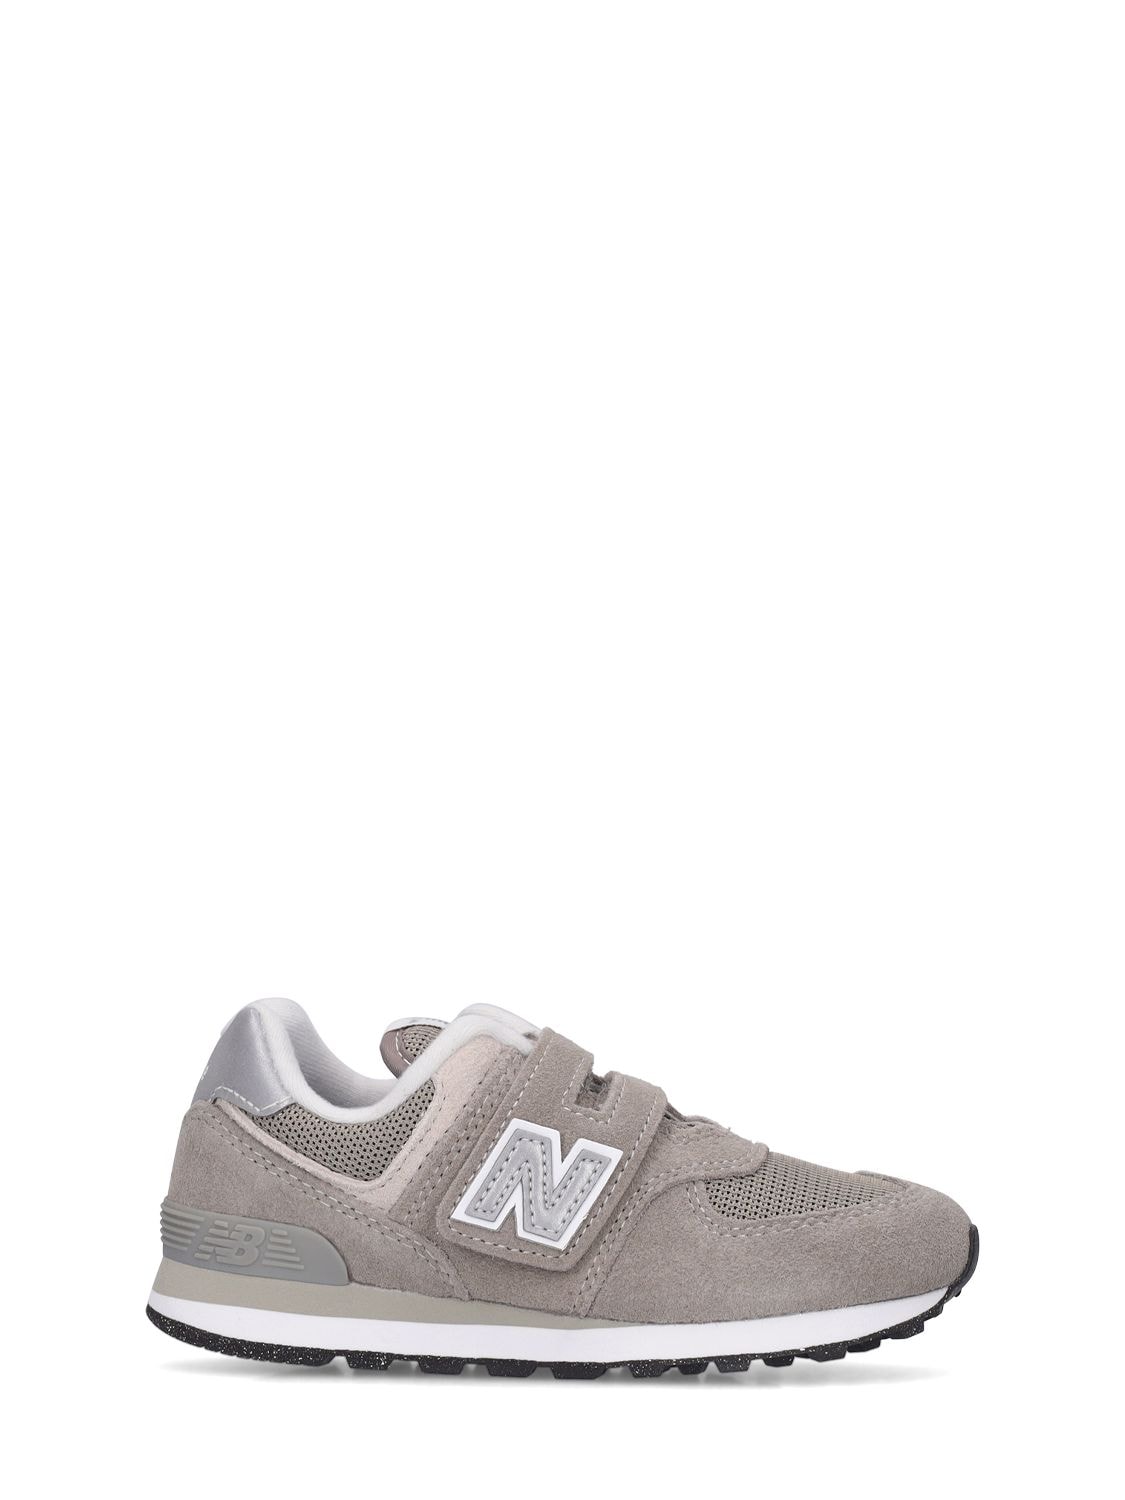 New Balance Kids White & Black 550 Sneakers